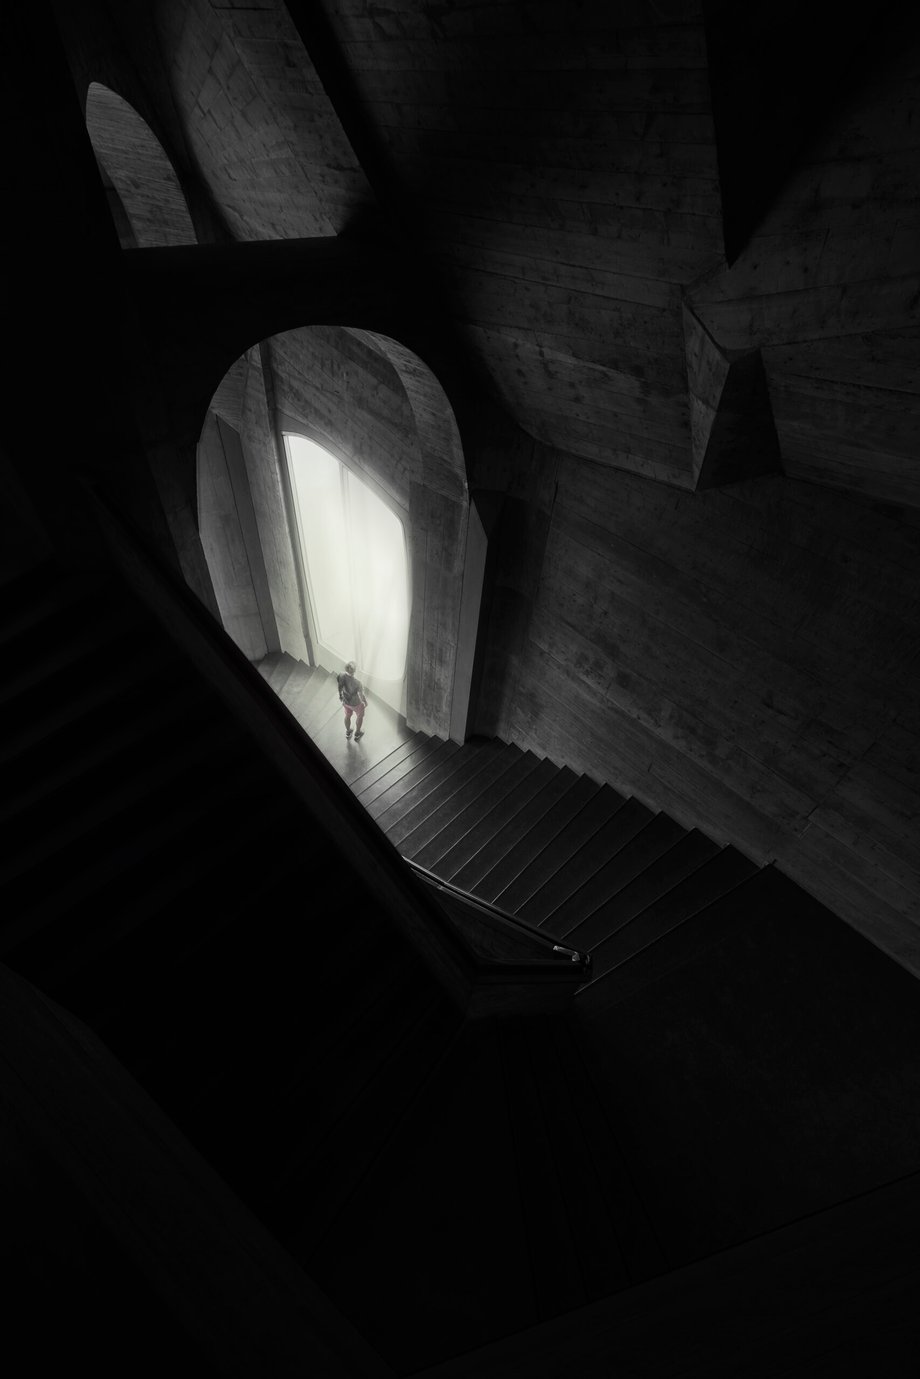 Matthias' favorite shot shows the darkened interior of the Goetheanum's main staircase 